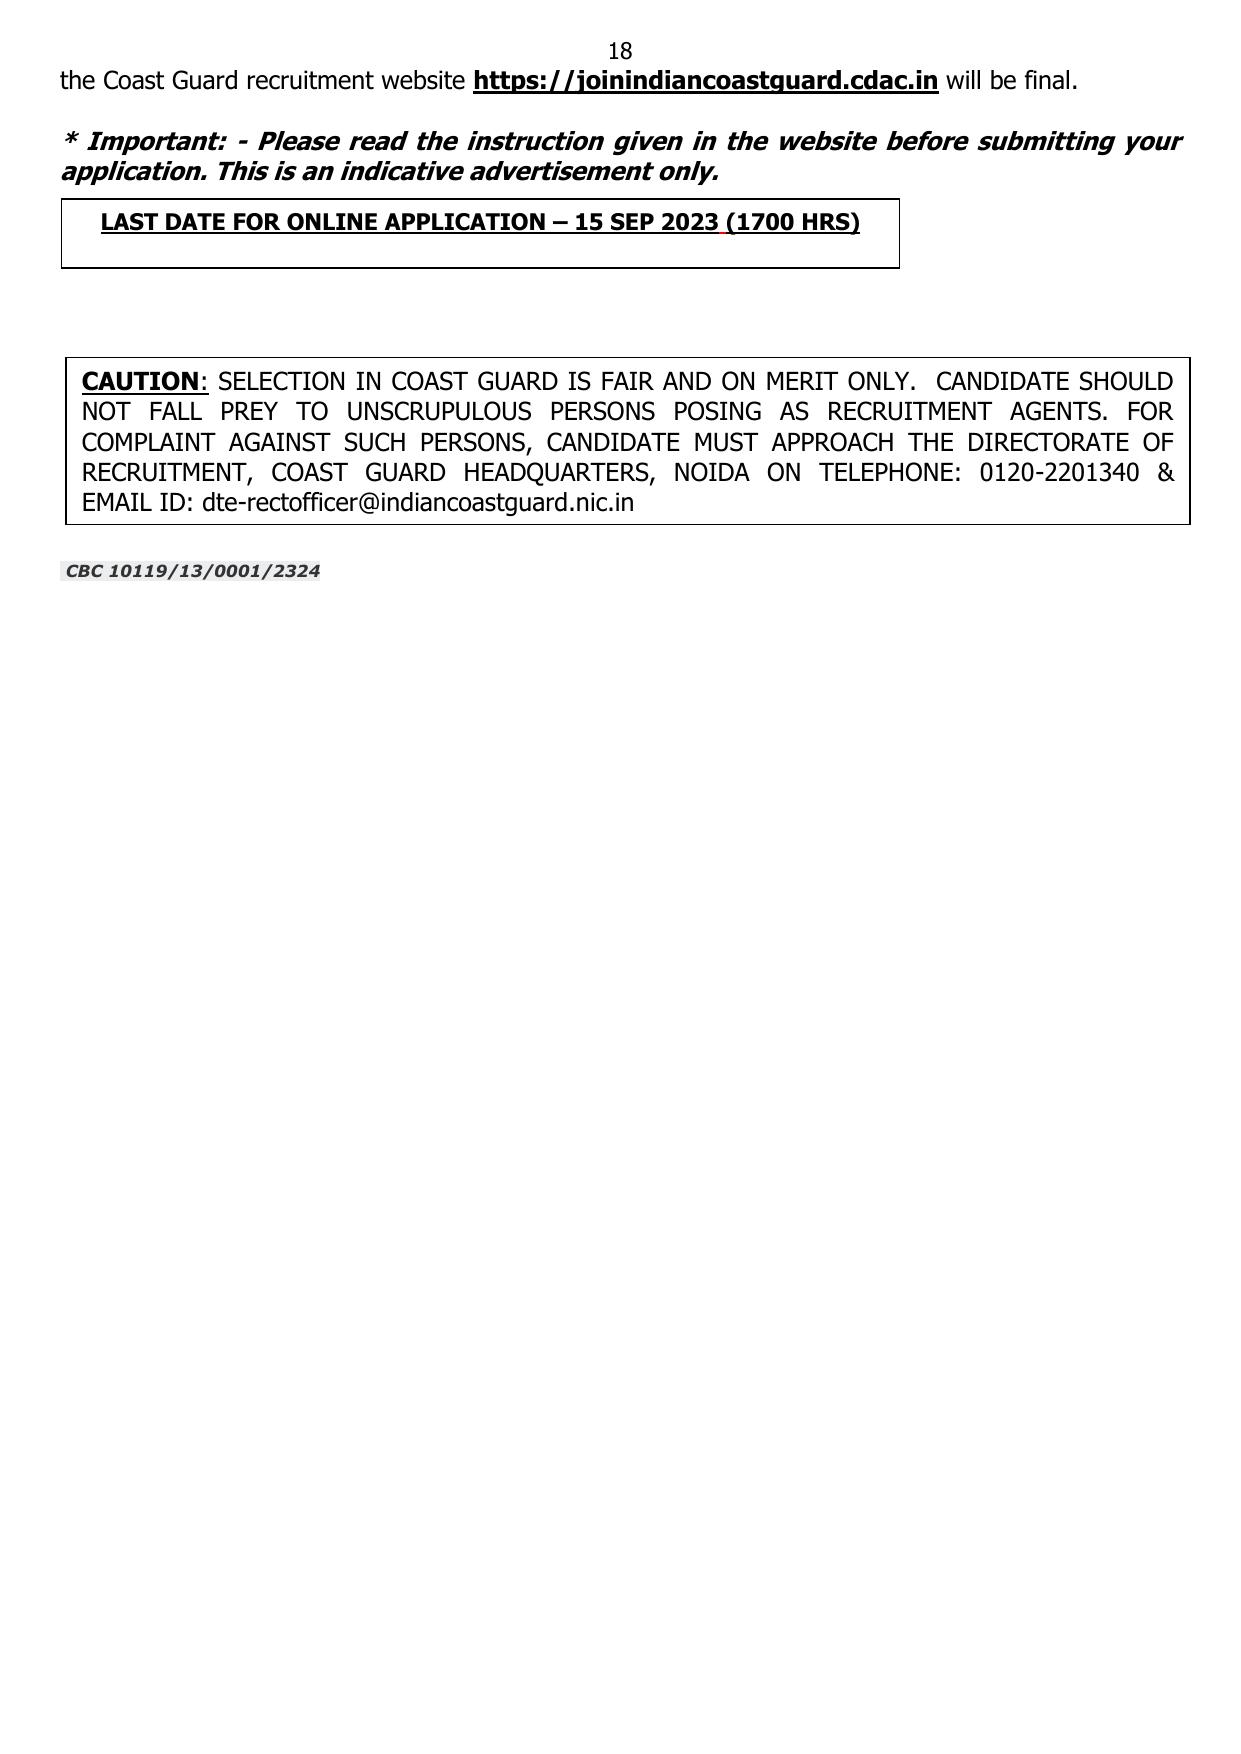 Indian Coast Guard (ICG) Assistant Commandant Recruitment 2023 - Page 15